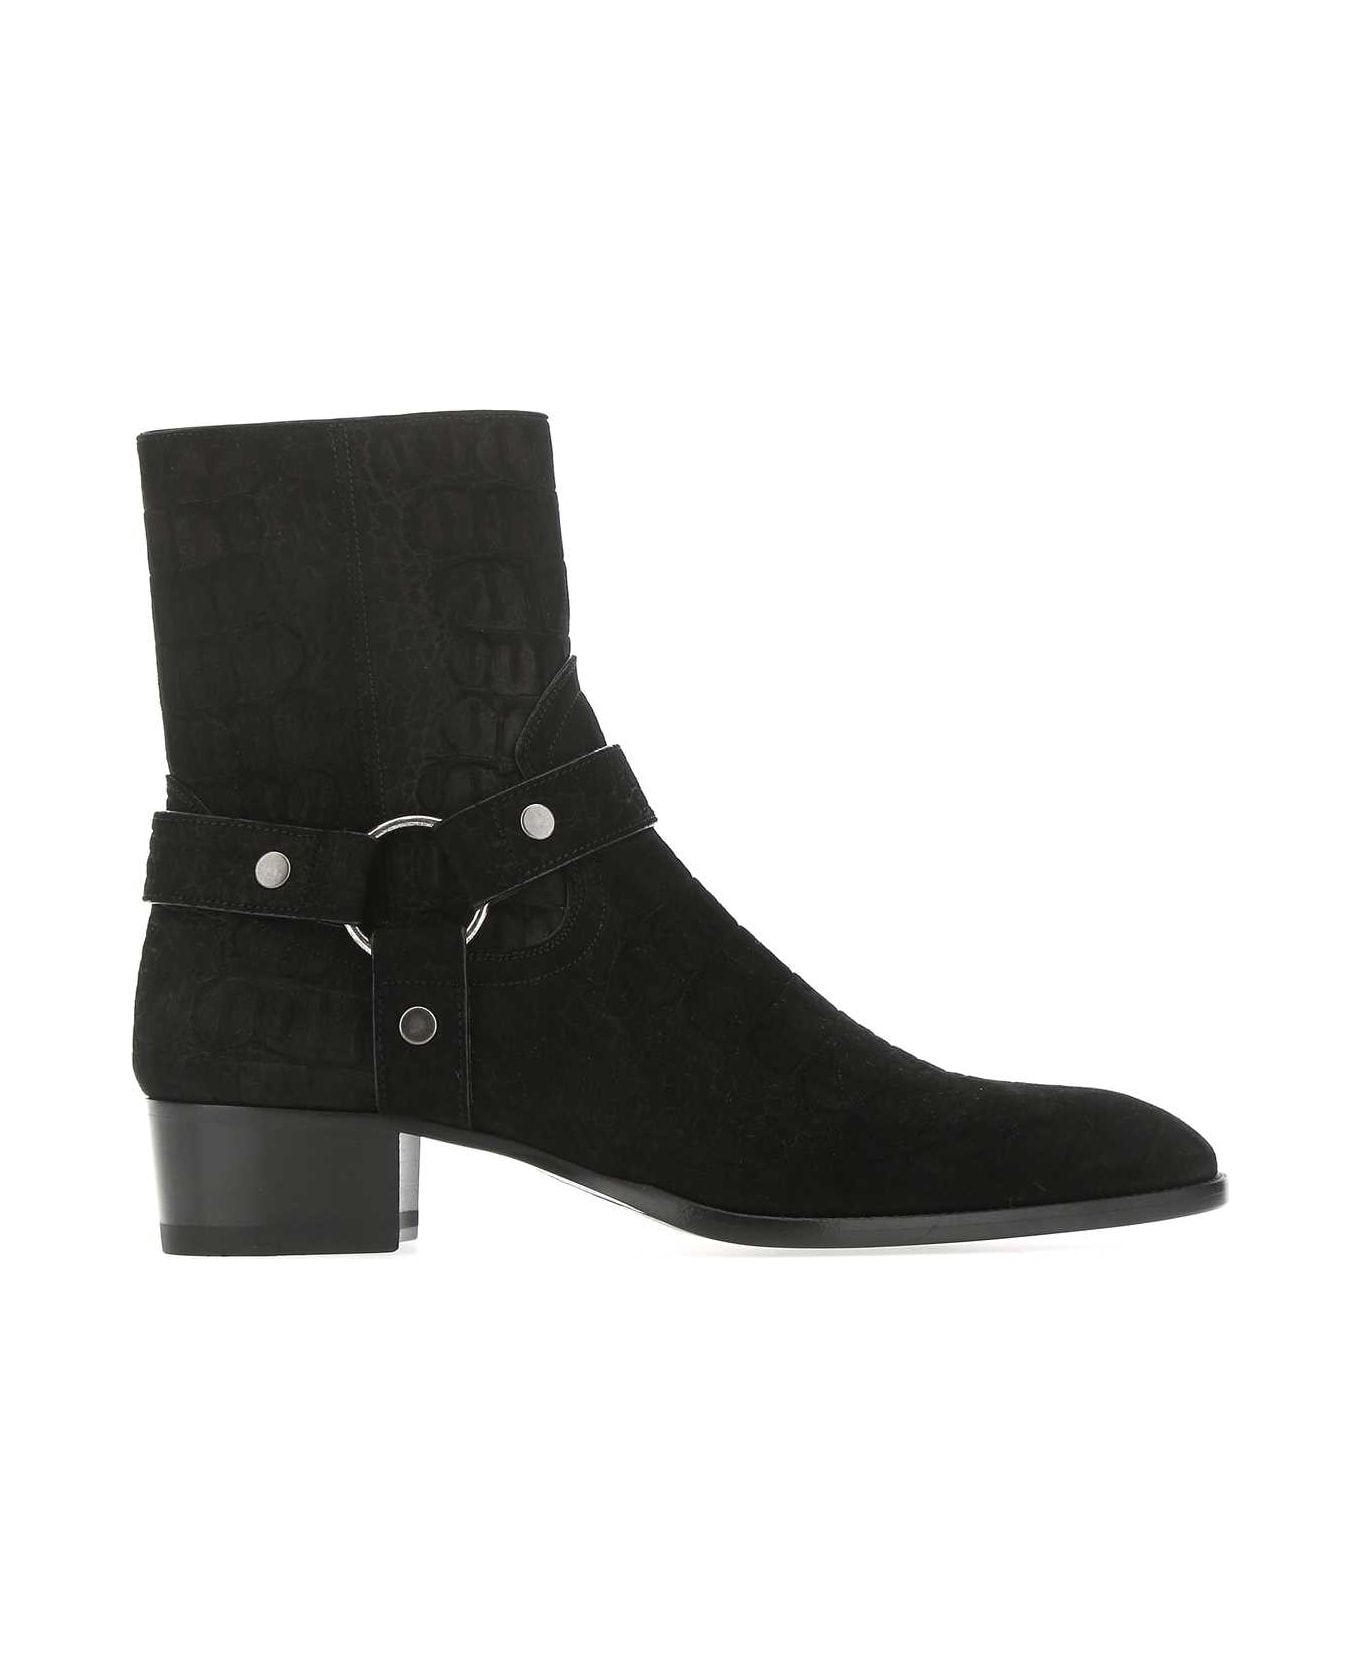 Saint Laurent Black Suede Boots - NERO